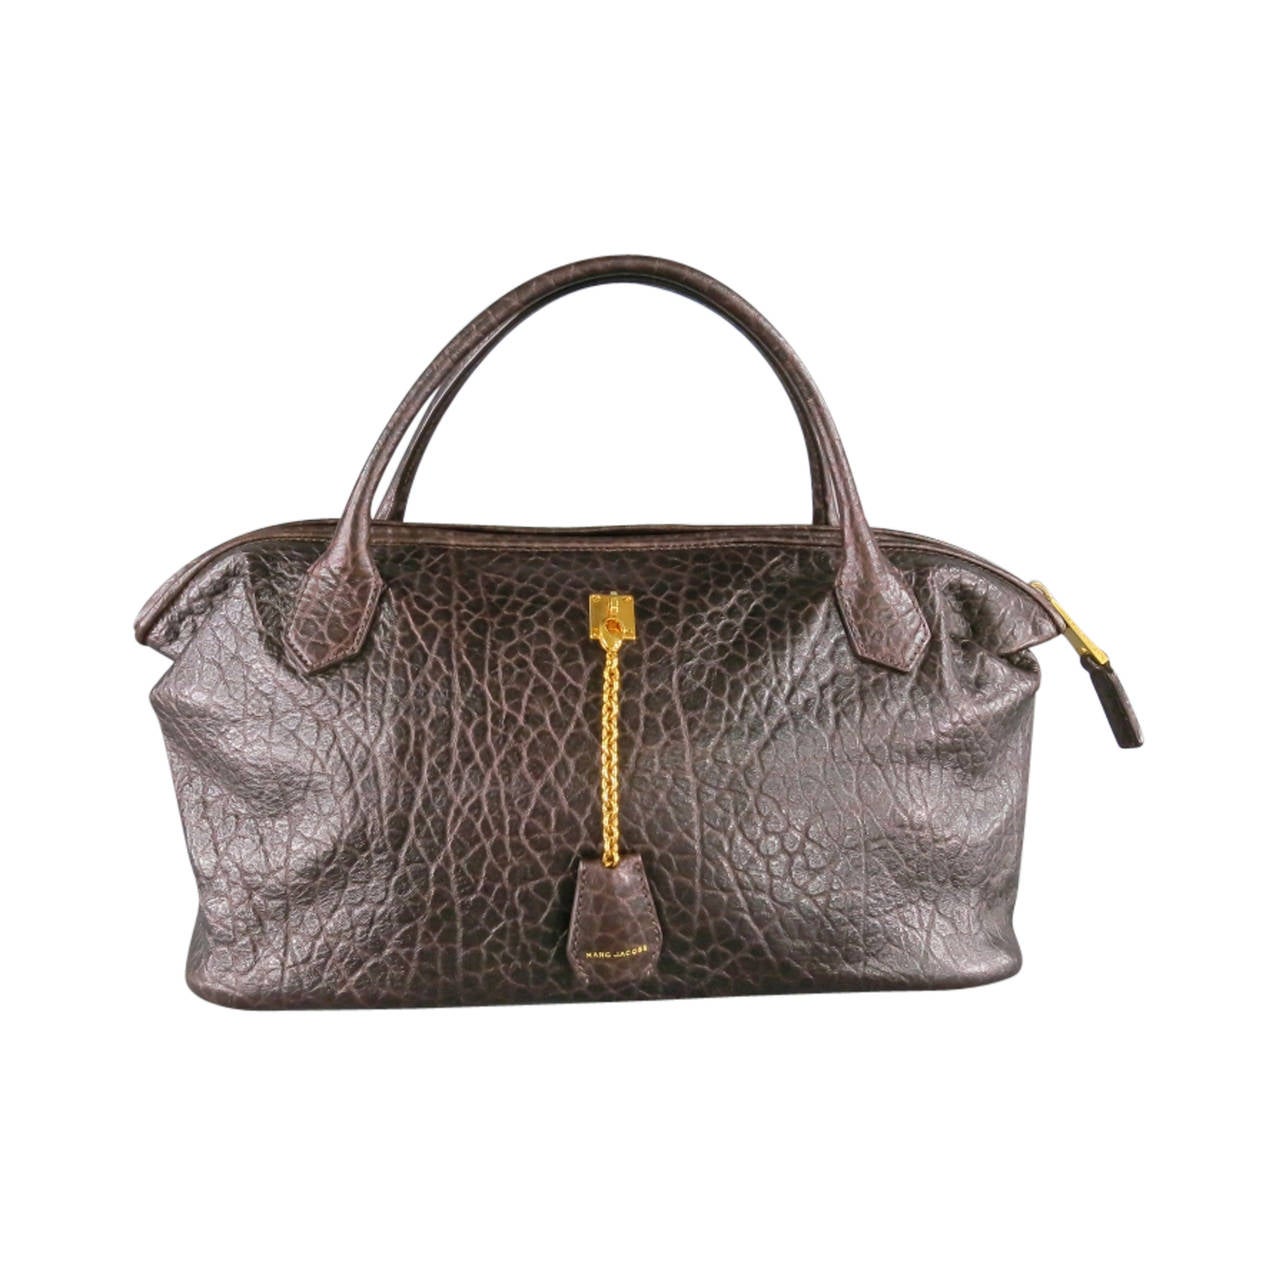 MARC JACOBS Brown Leather Top Handles Lock & Key Handbag